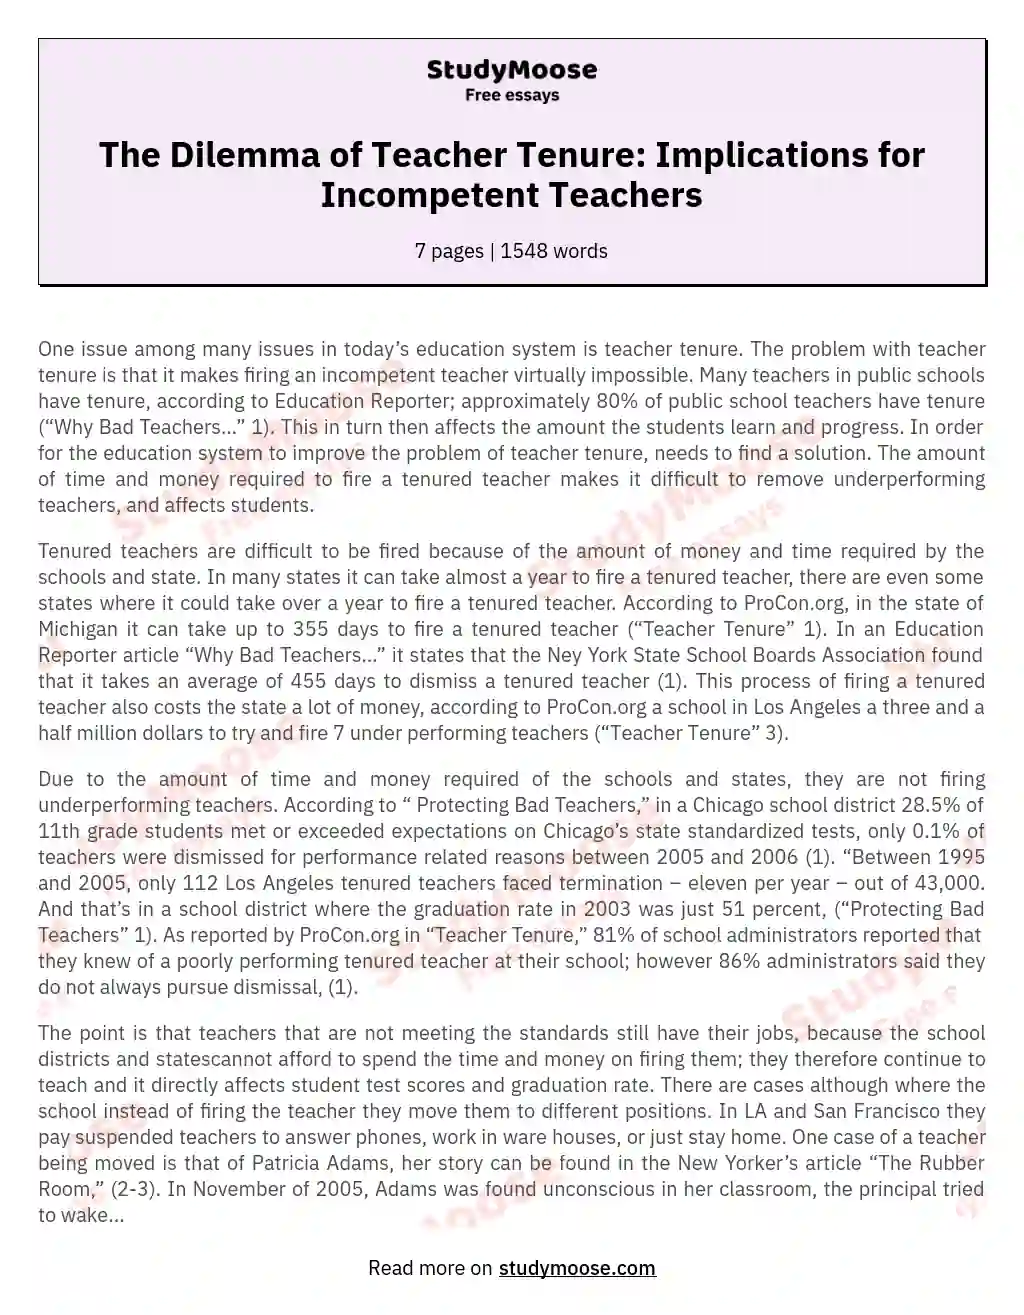 The Dilemma of Teacher Tenure: Implications for Incompetent Teachers essay